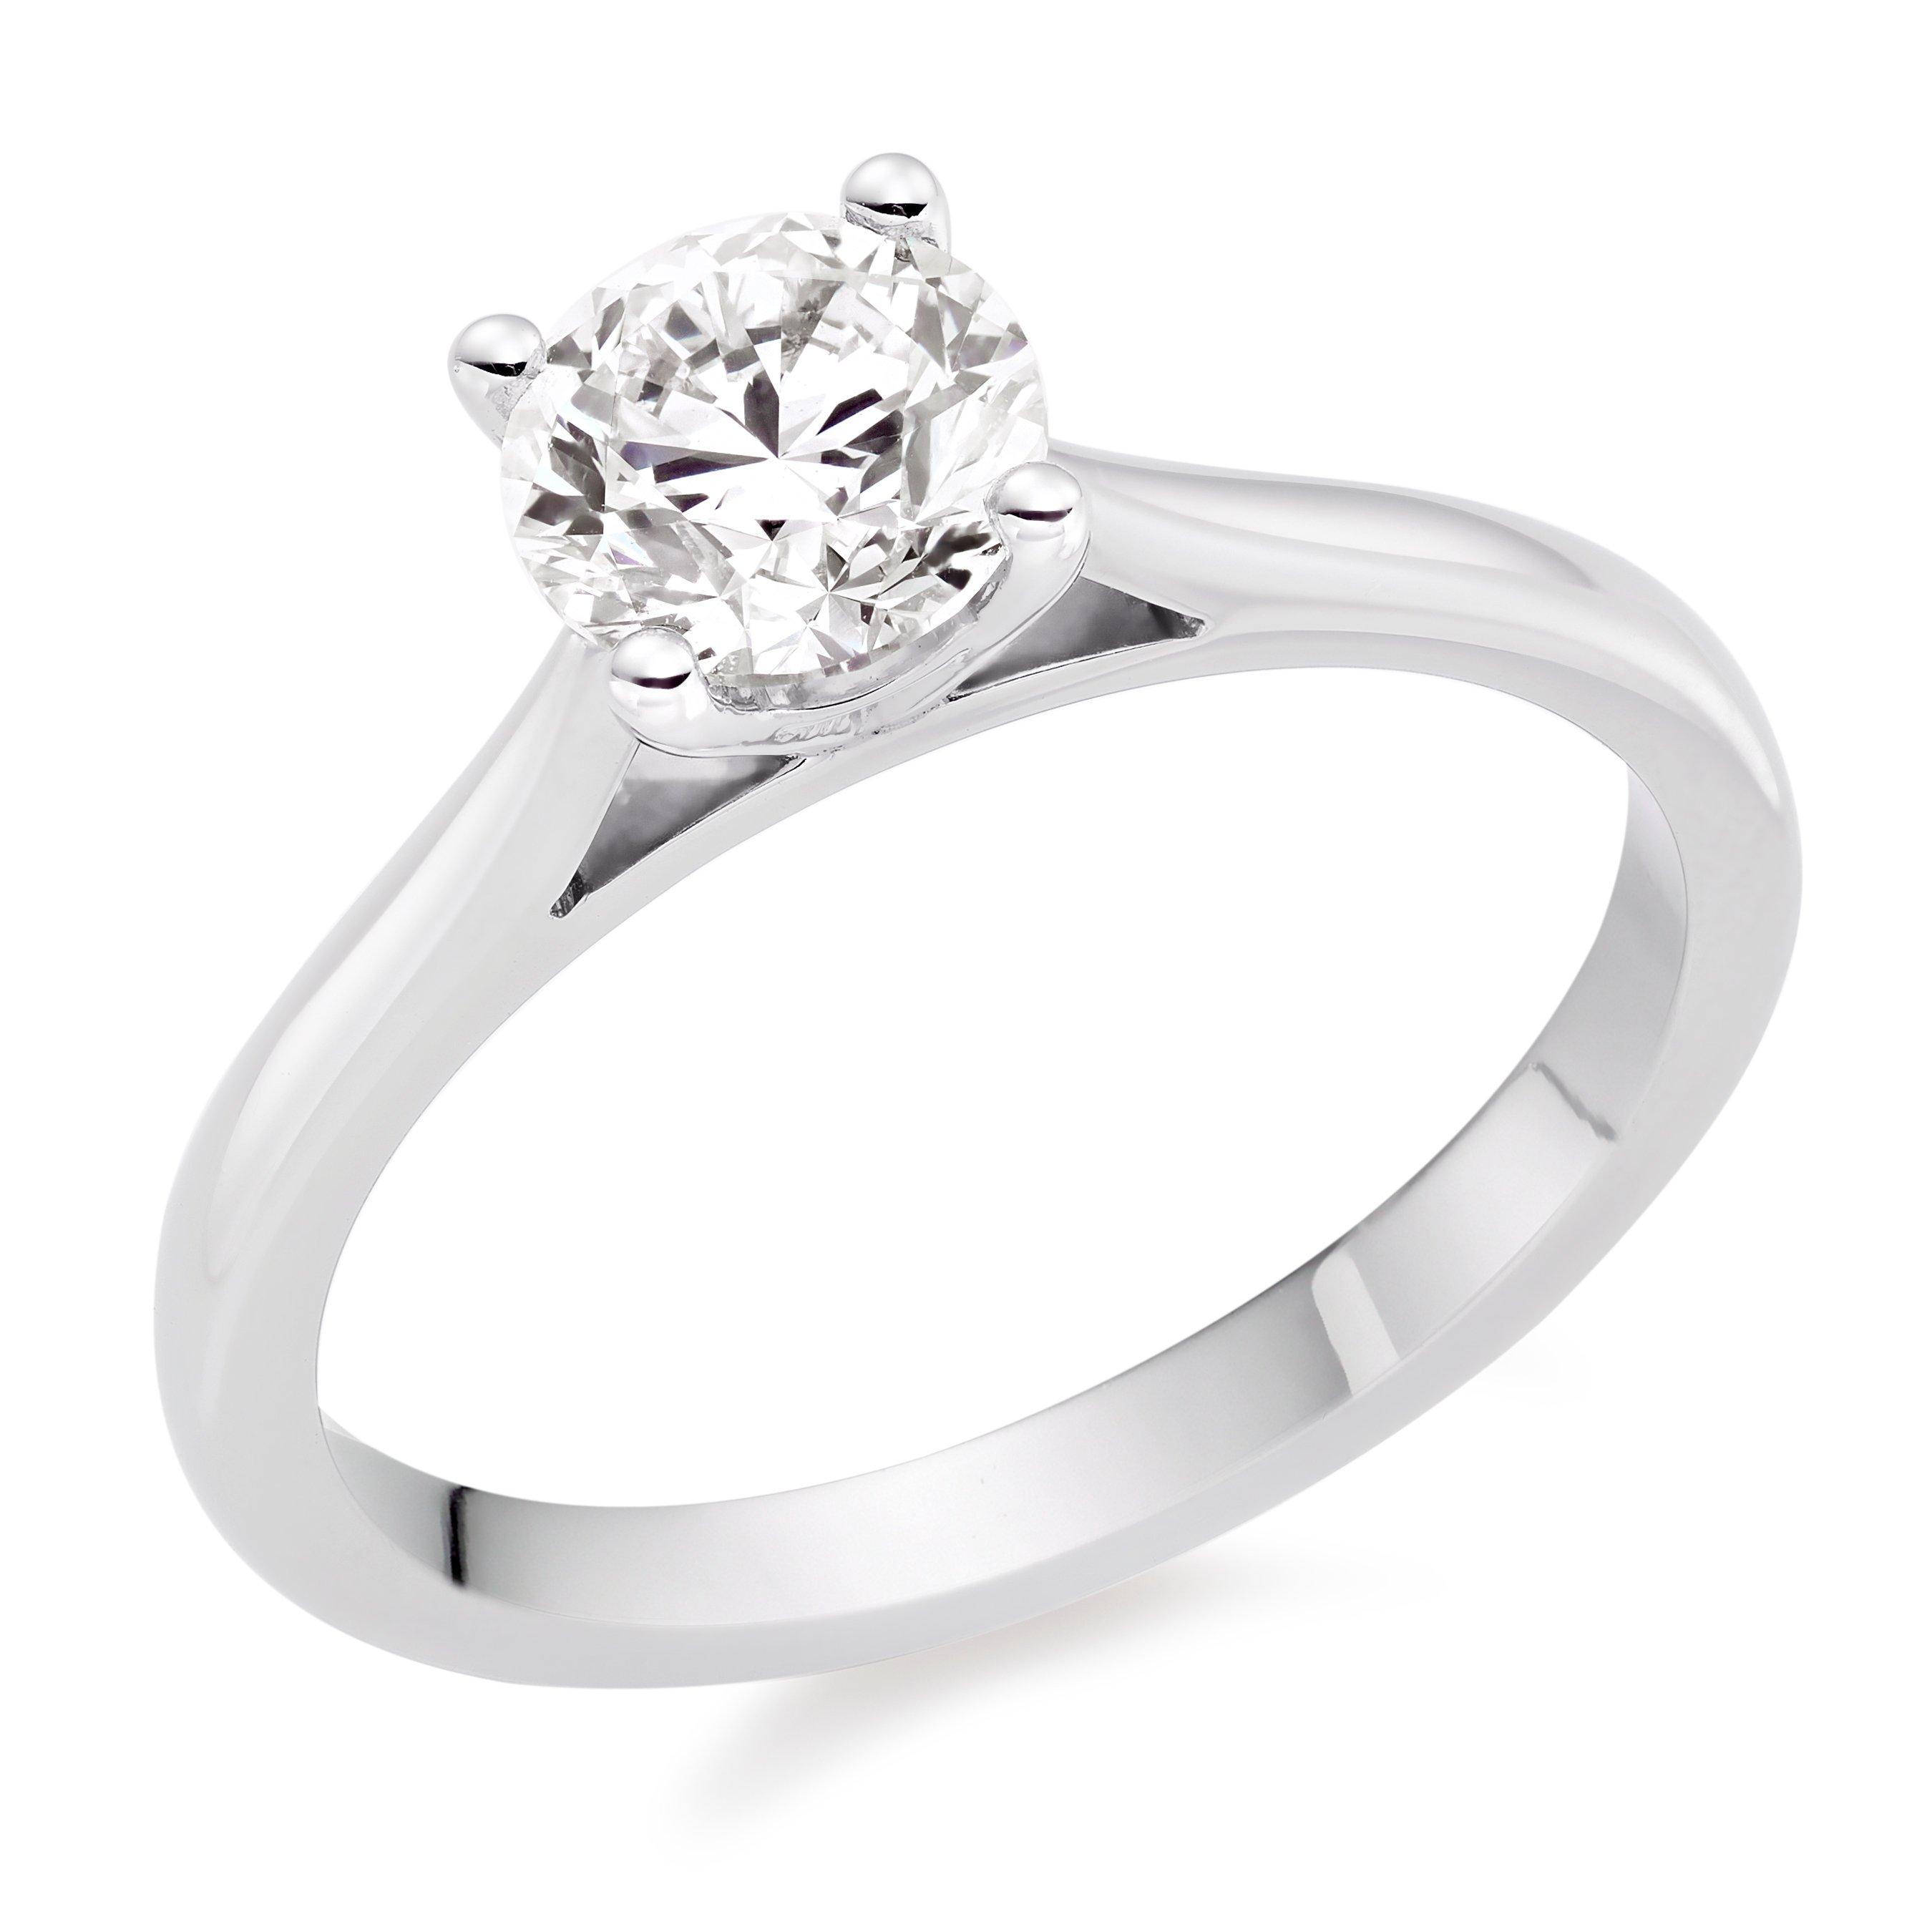 Platinum Diamond Solitaire Ring | 0137572 | Beaverbrooks the Jewellers